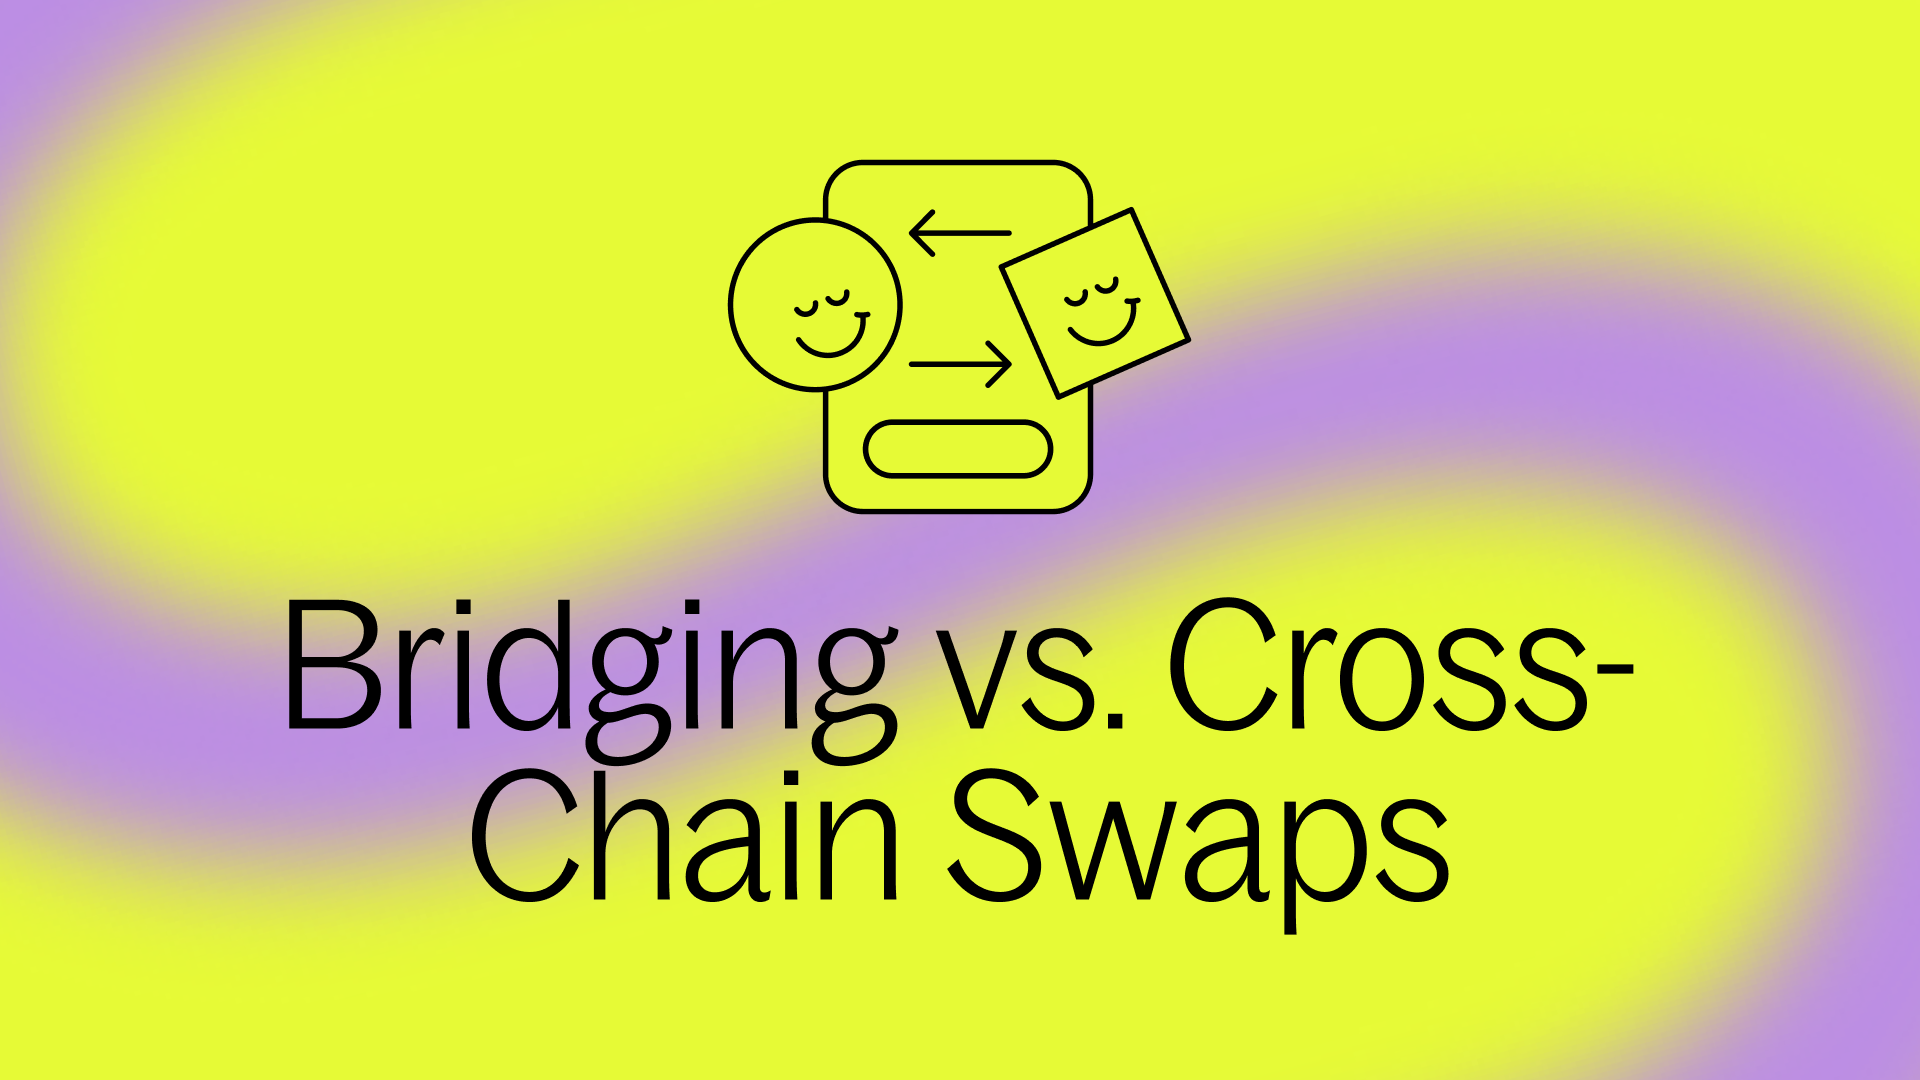 Bridging vs. Cross-chain Swaps